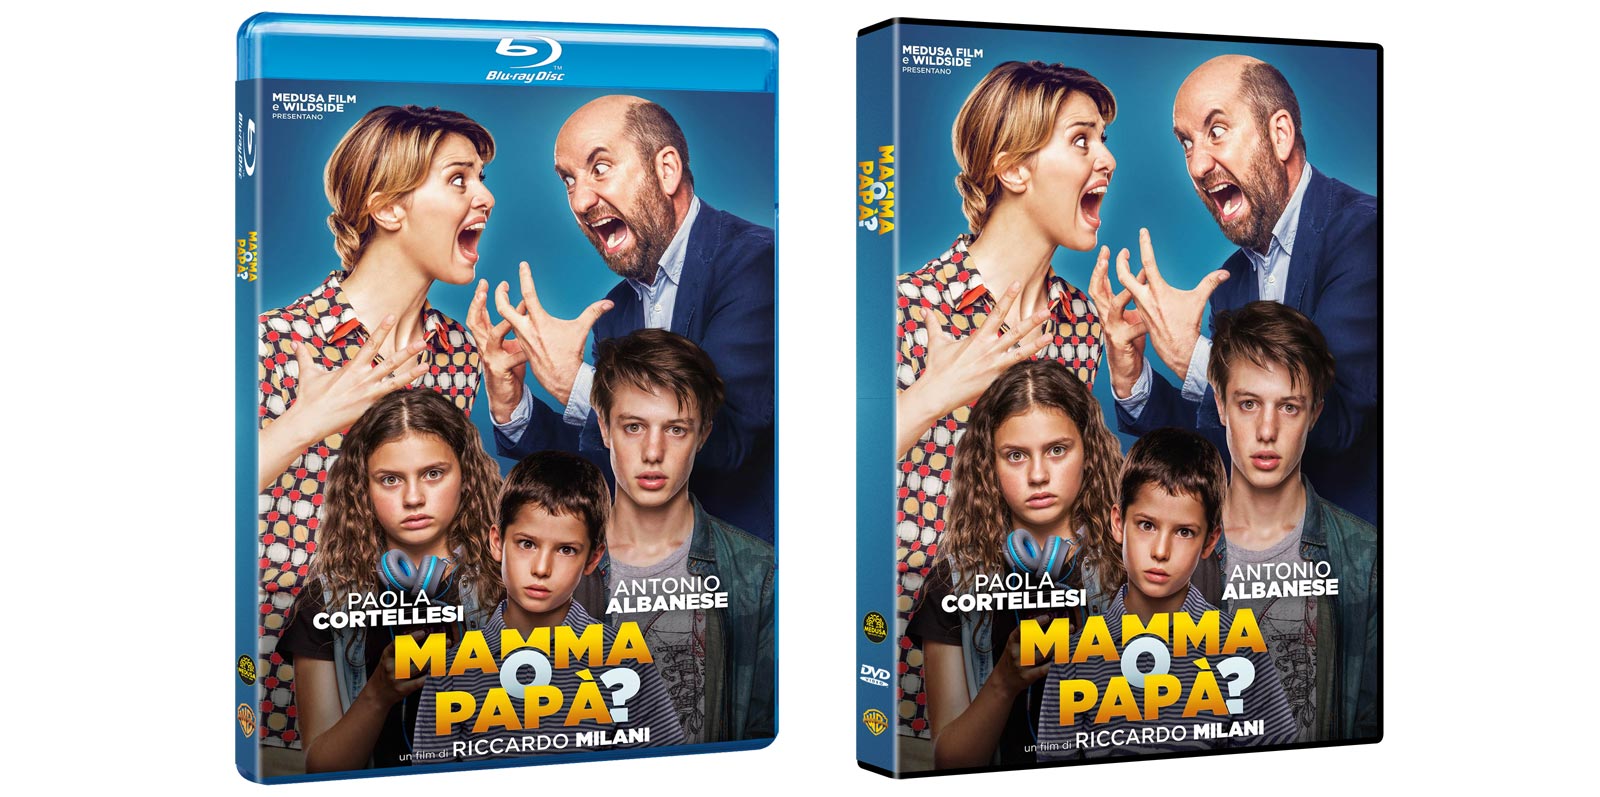 Mamma o papa'? con Paola Cortellesi e Antonio Albanese in DVD e Blu-ray